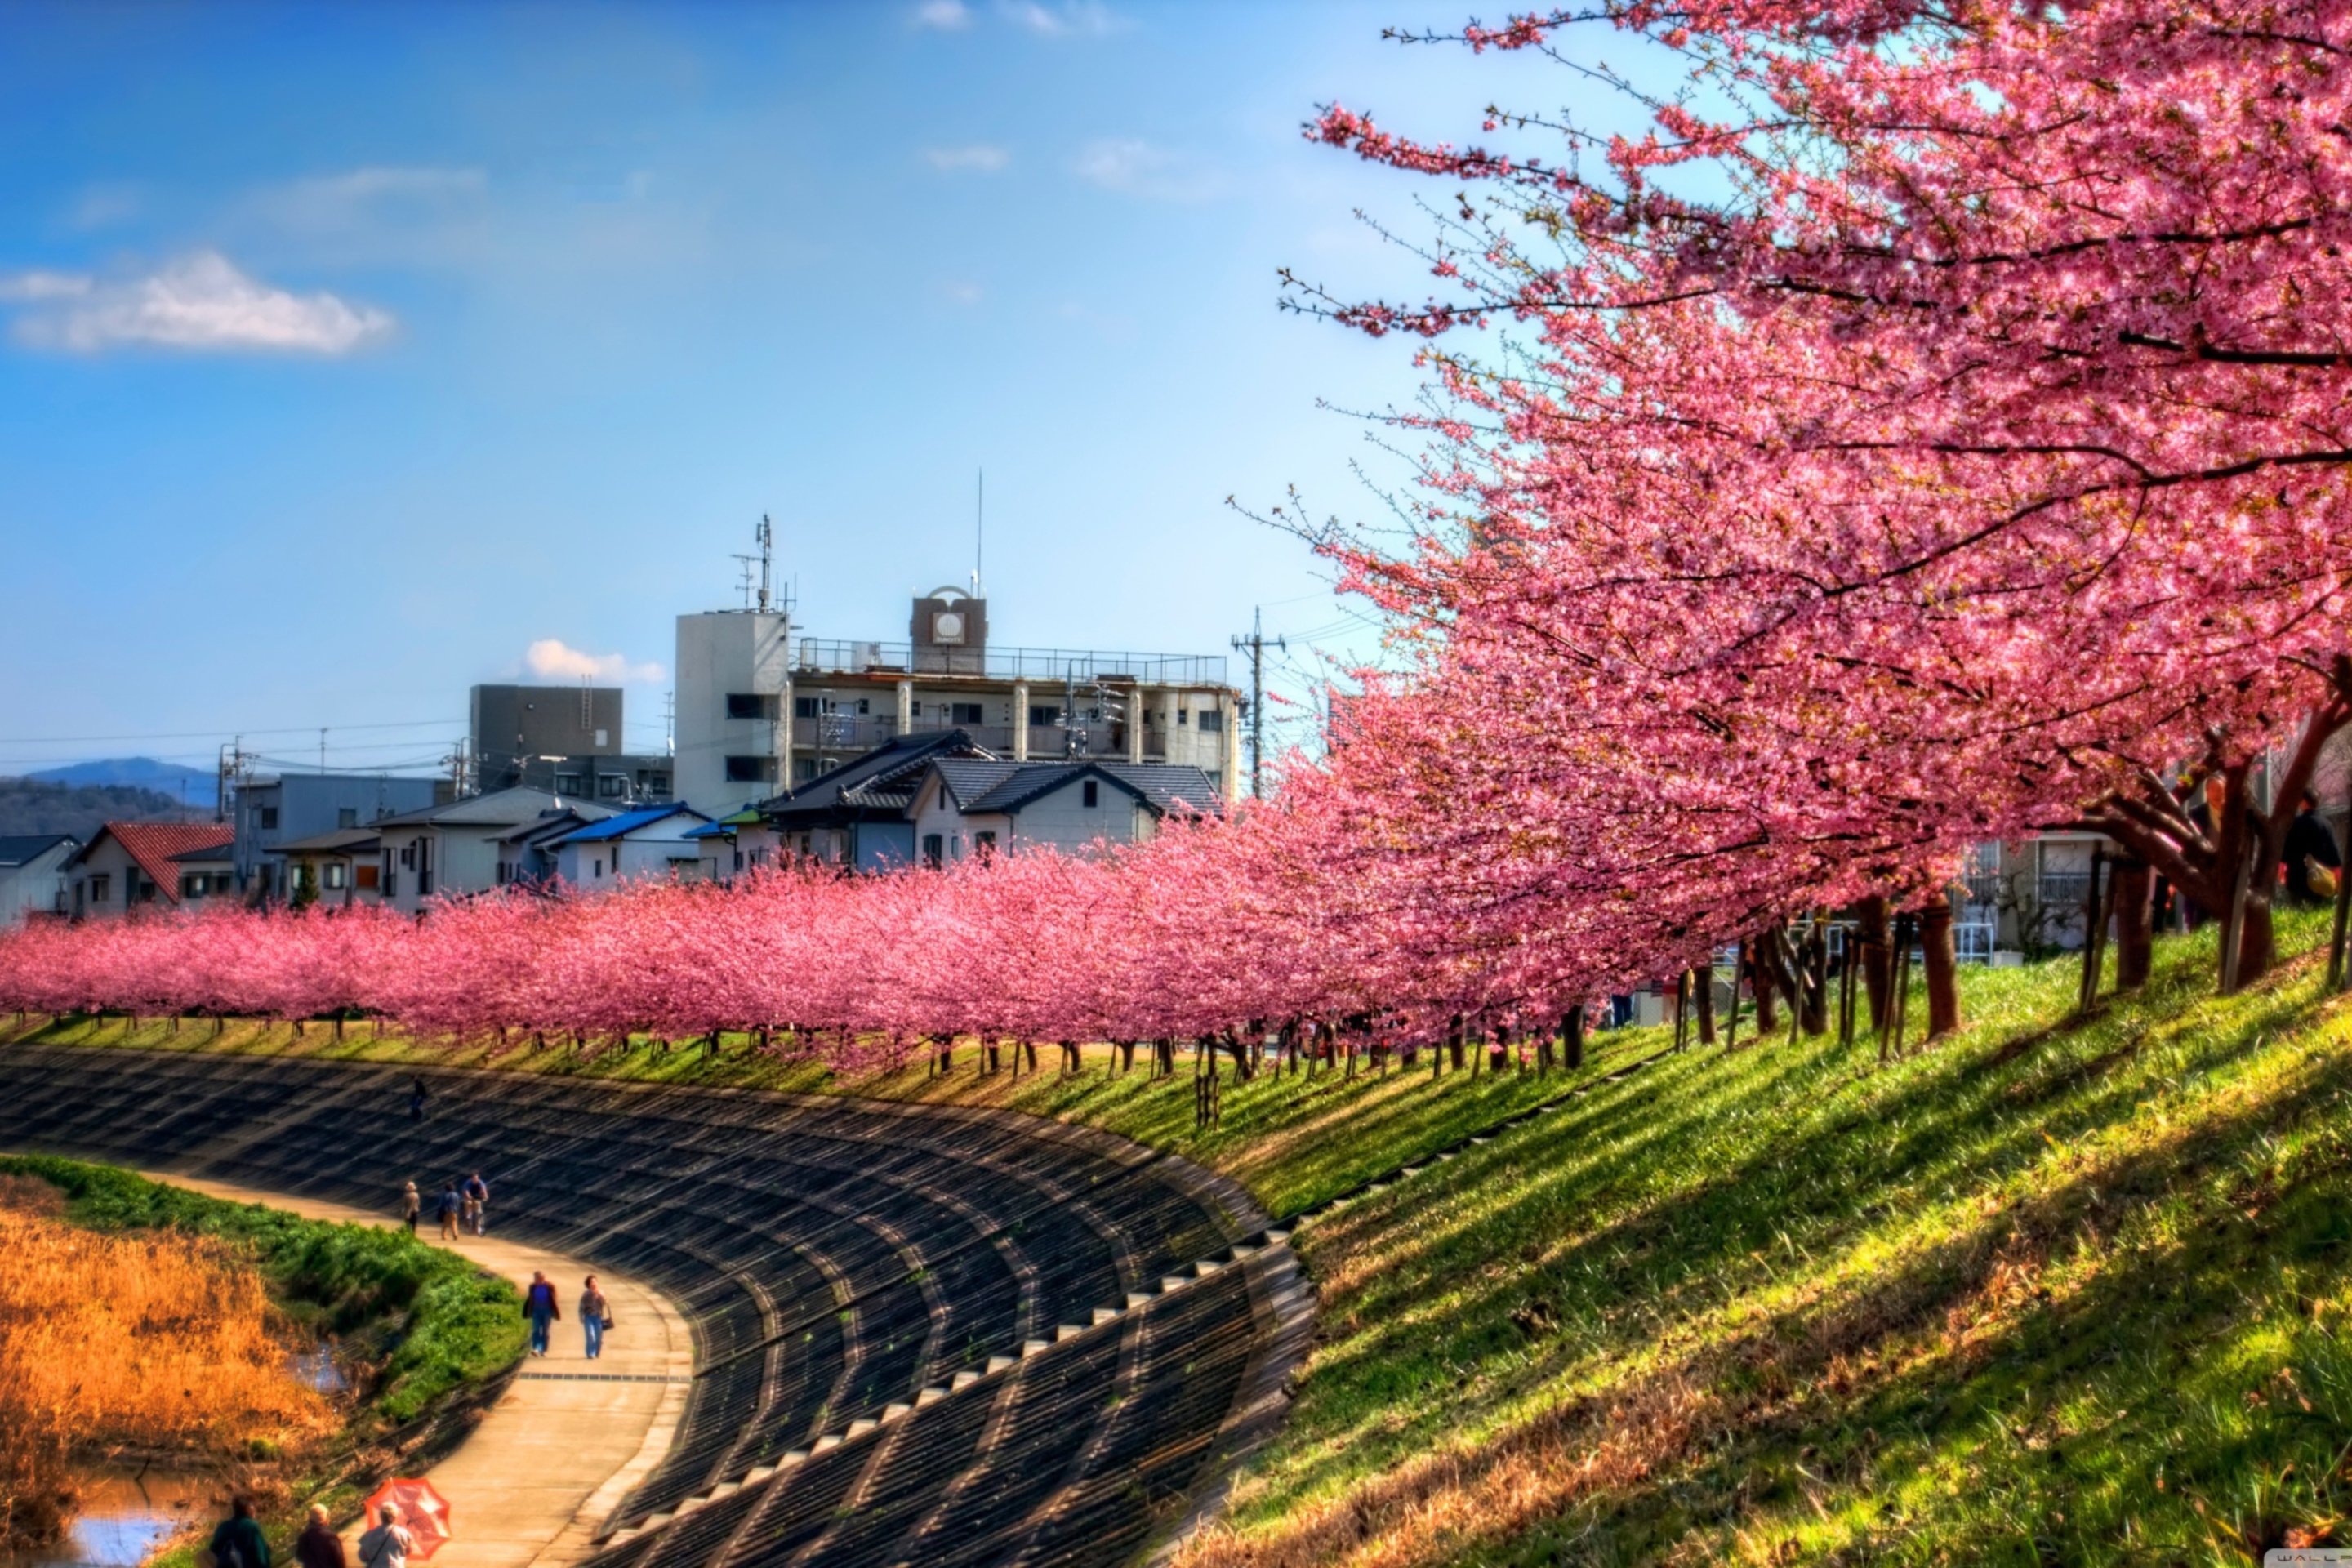 Tokyo blossom